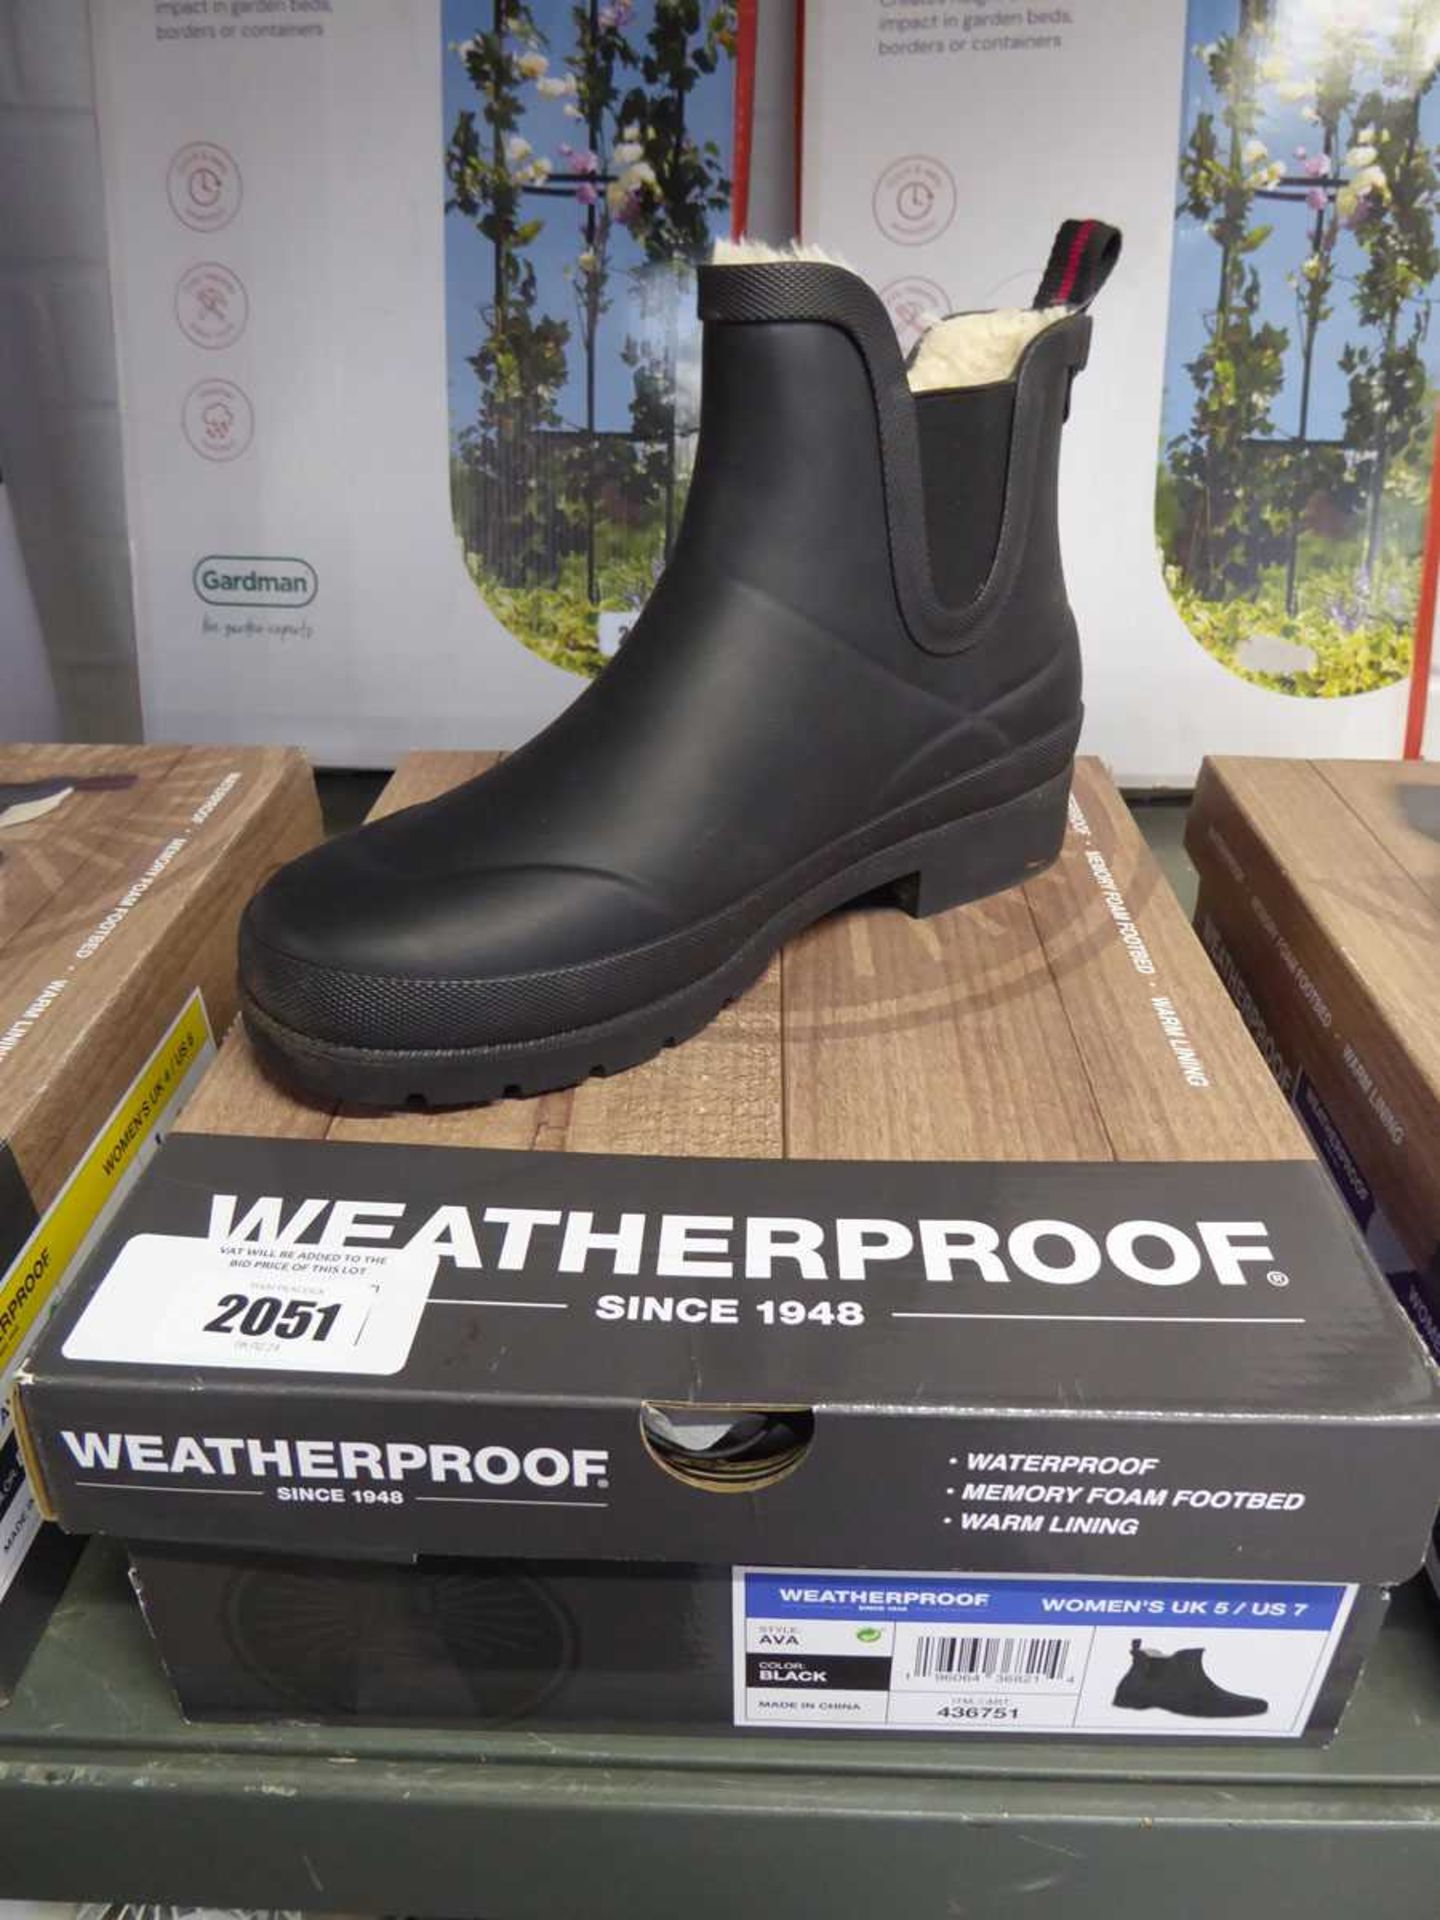 +VAT Boxed pair of Weatherproof ladies boots in black (size UK 5)